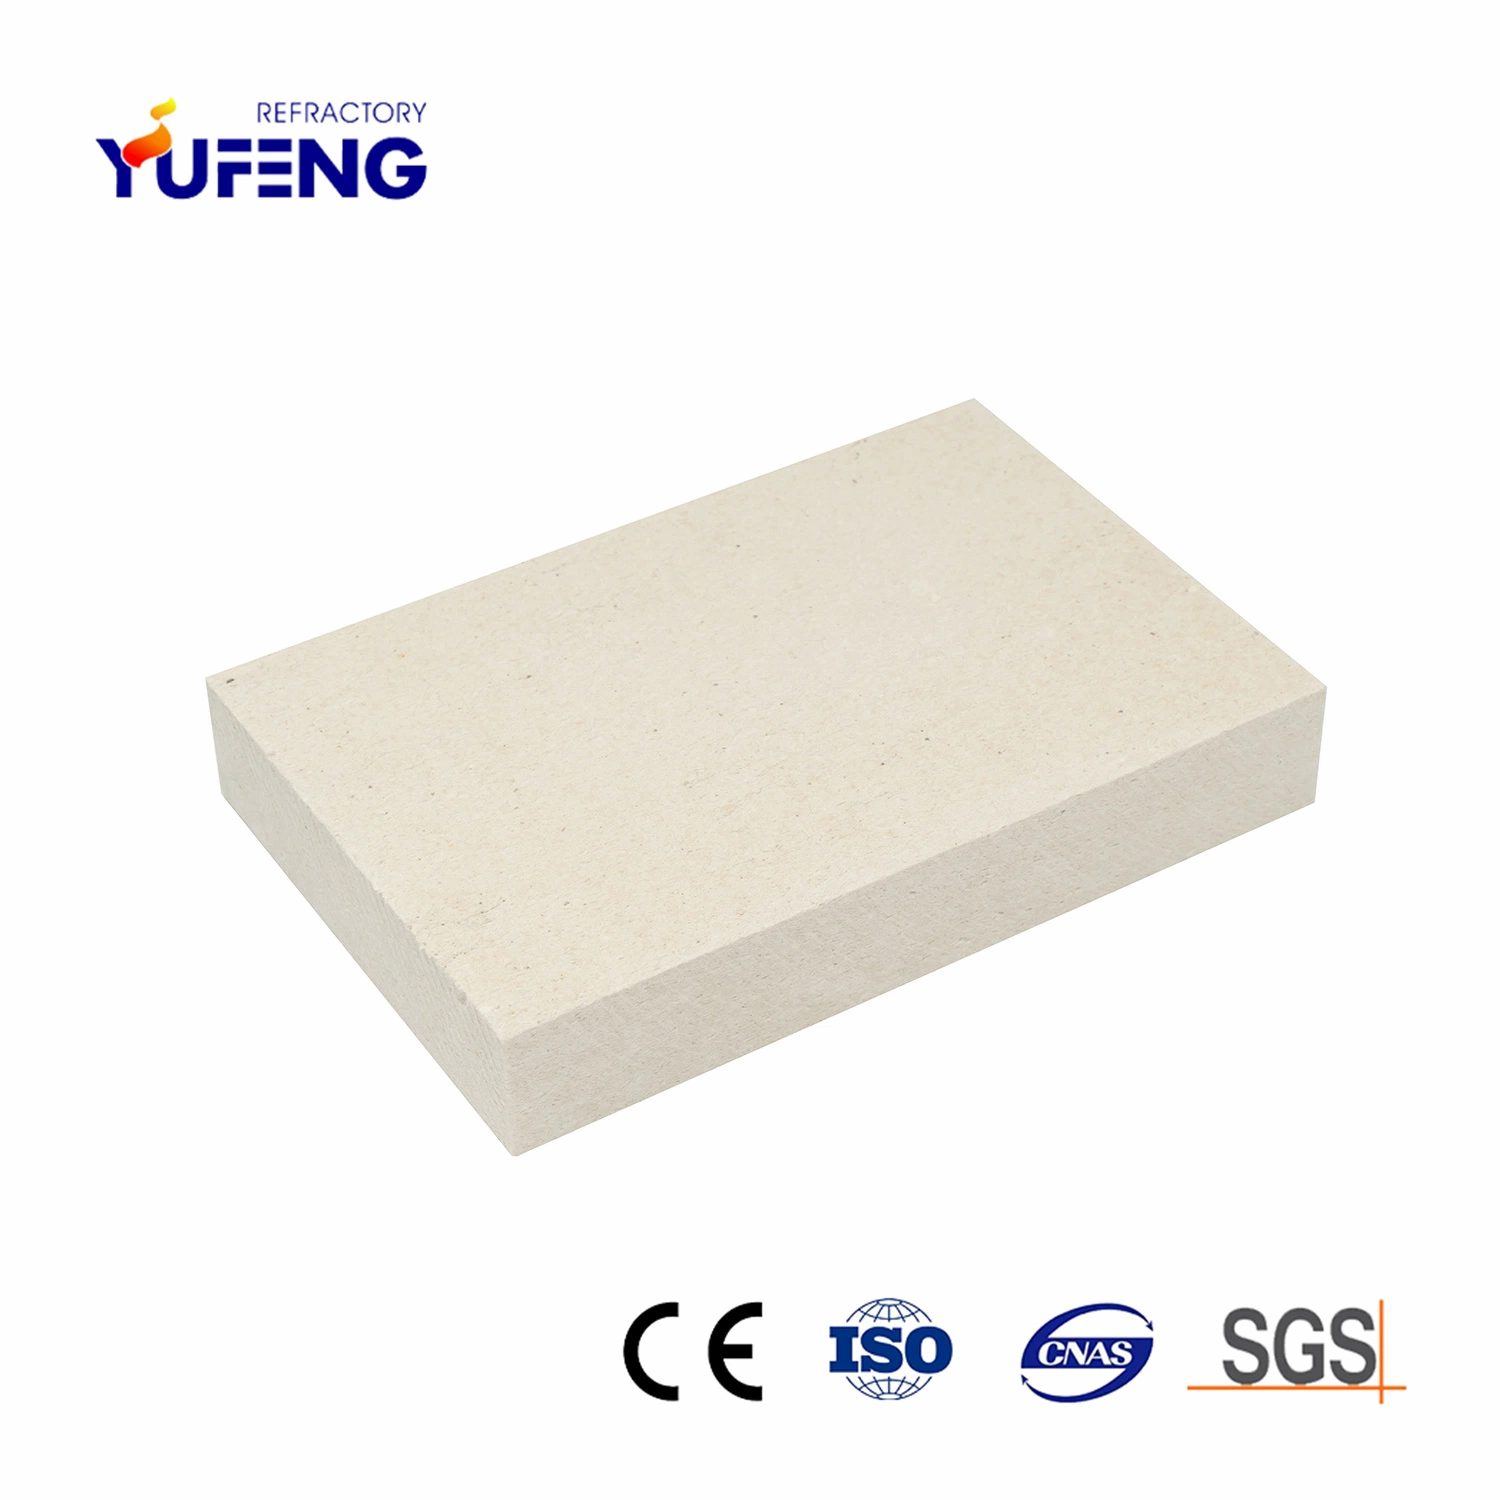 Backup Insulation Material Alumina Silicate Ceramic Fiber Board for Monolithic Refractories